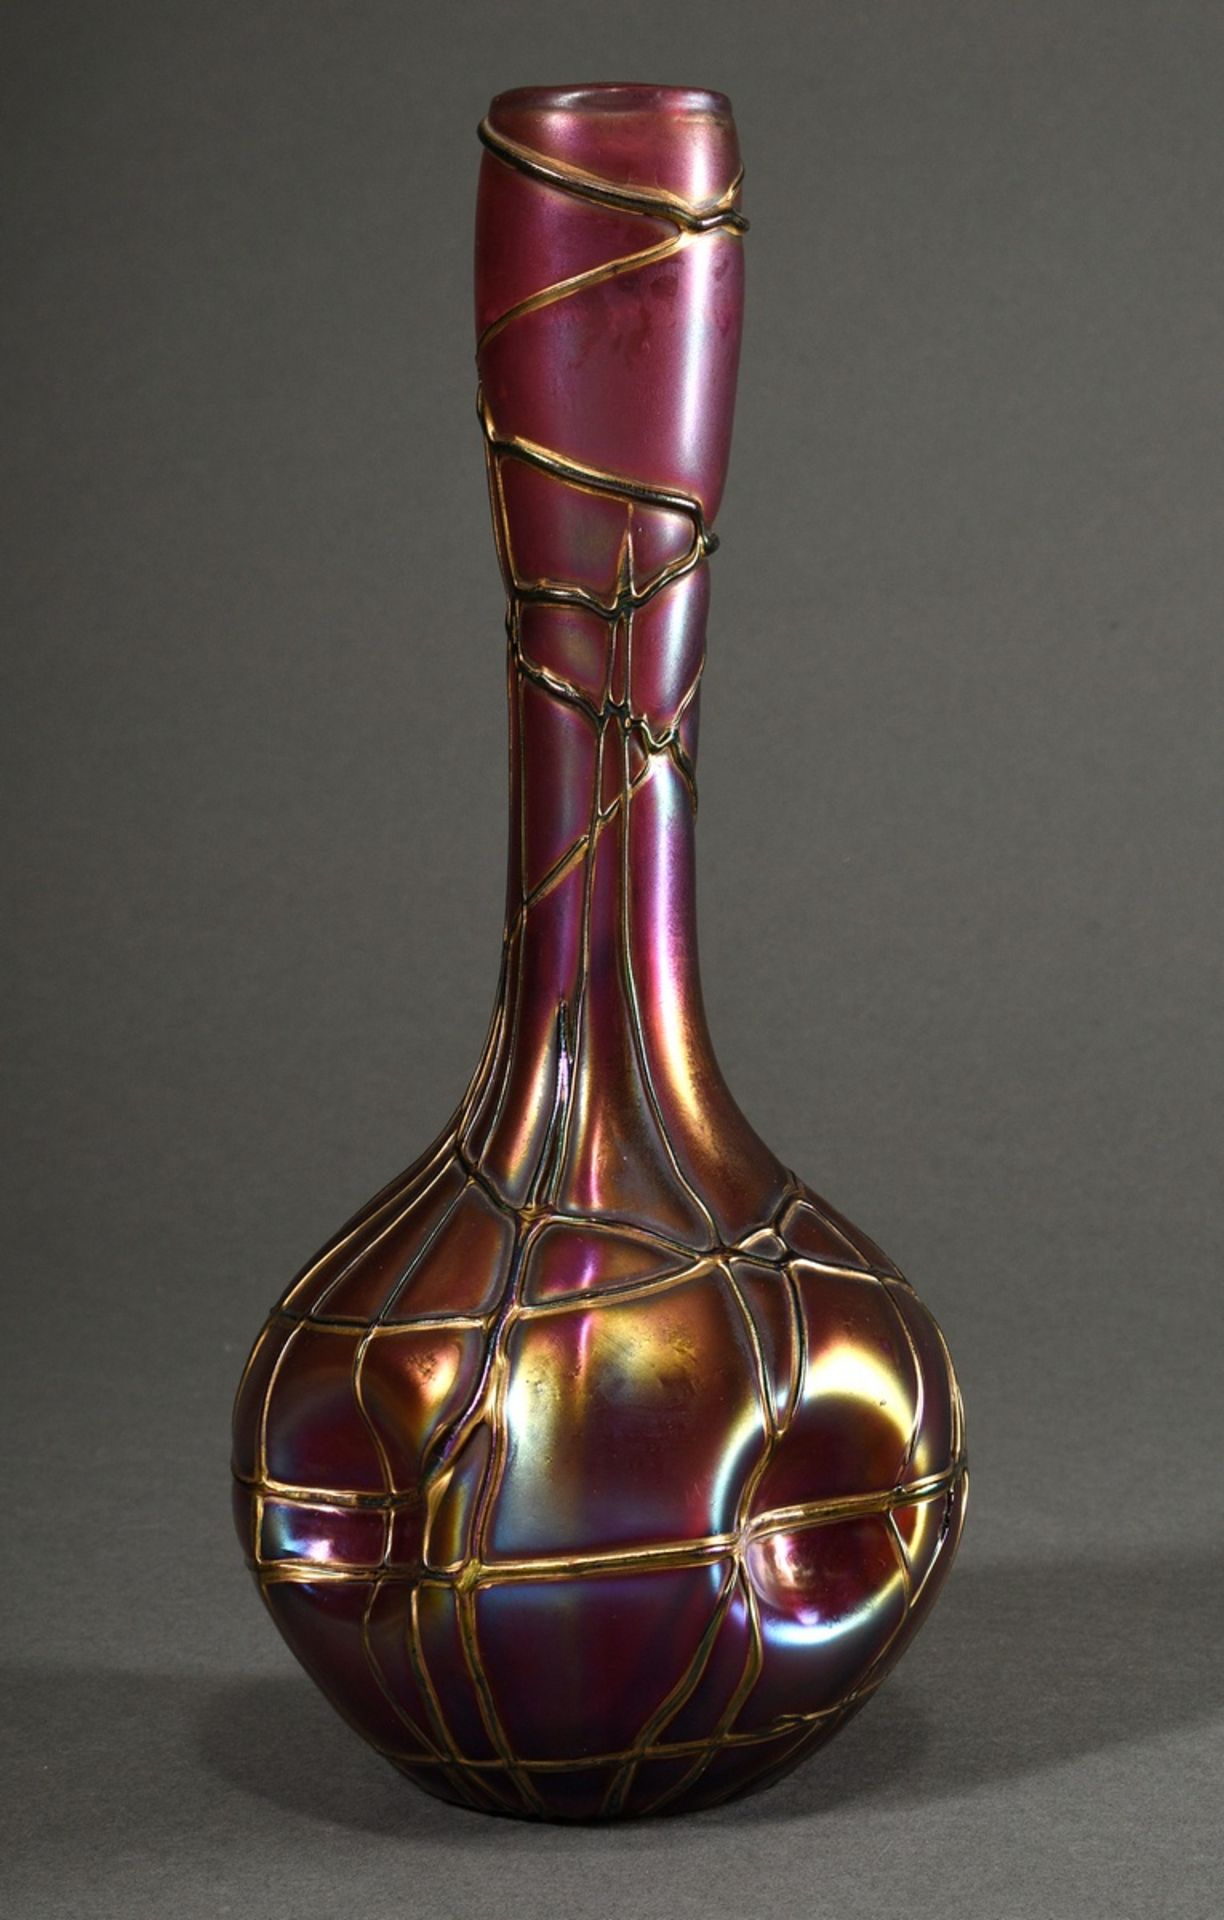 Jugendstil Glas Keulenvase mit aufgelegtem Faden auf rosé-violett lustrierendem Korpus, H. 27cm